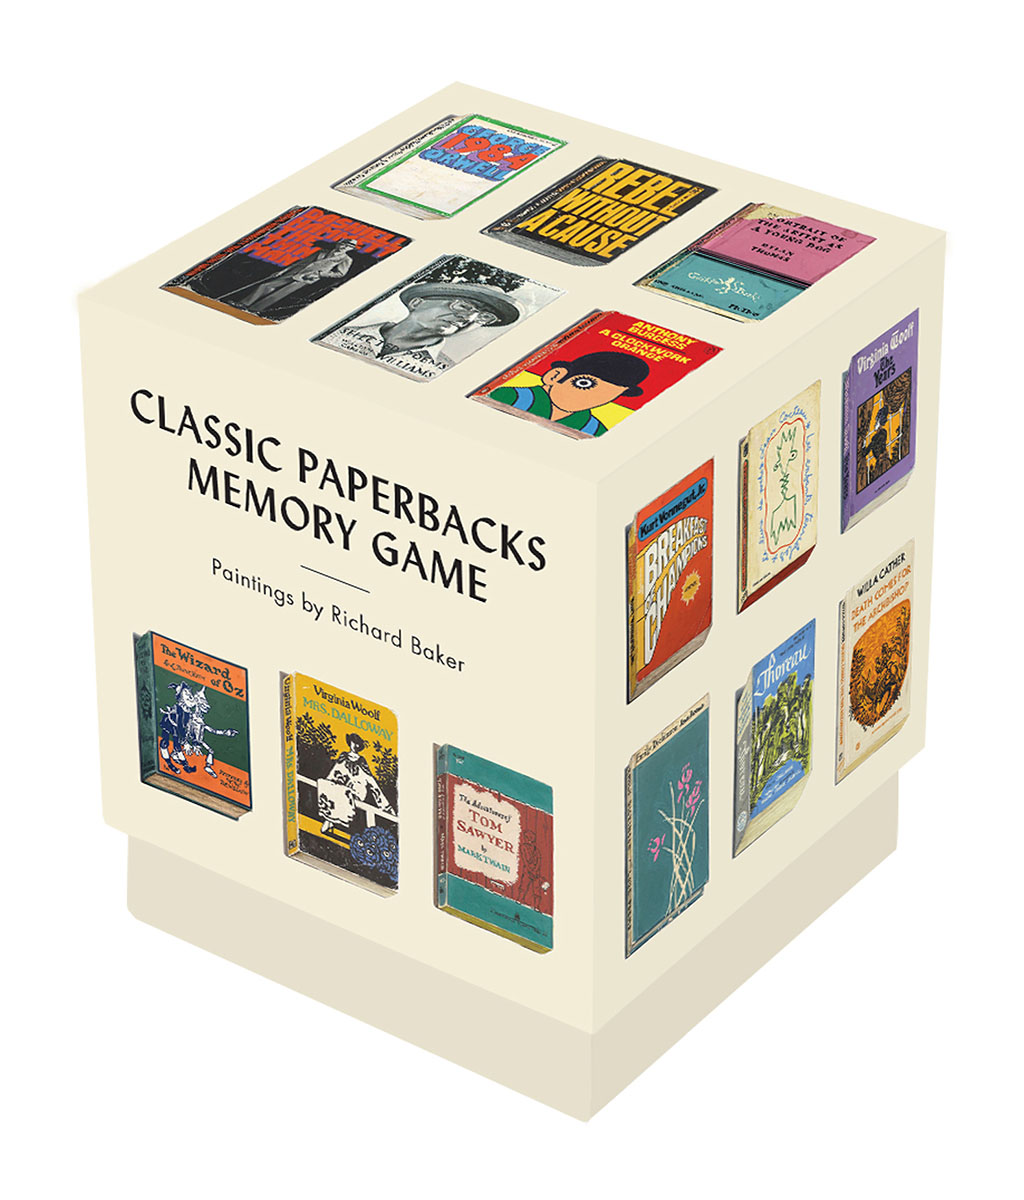 Classic Paperbacks Memory Game 
															/ Princeton Architectural Press							